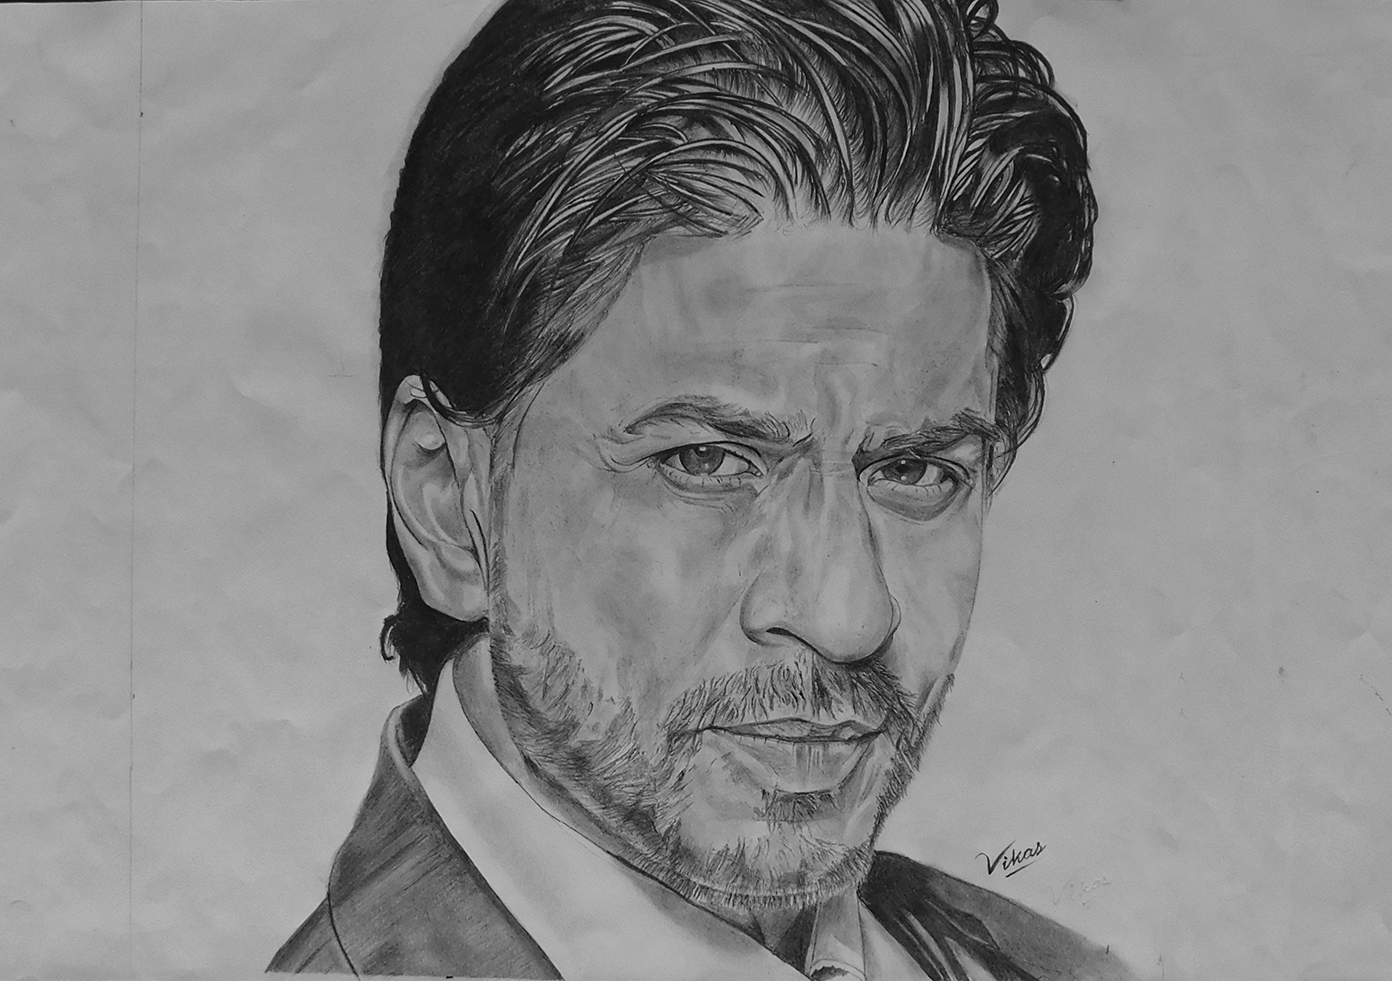 Sketch of Shah Rukh Khan by PranavParrikar on DeviantArt